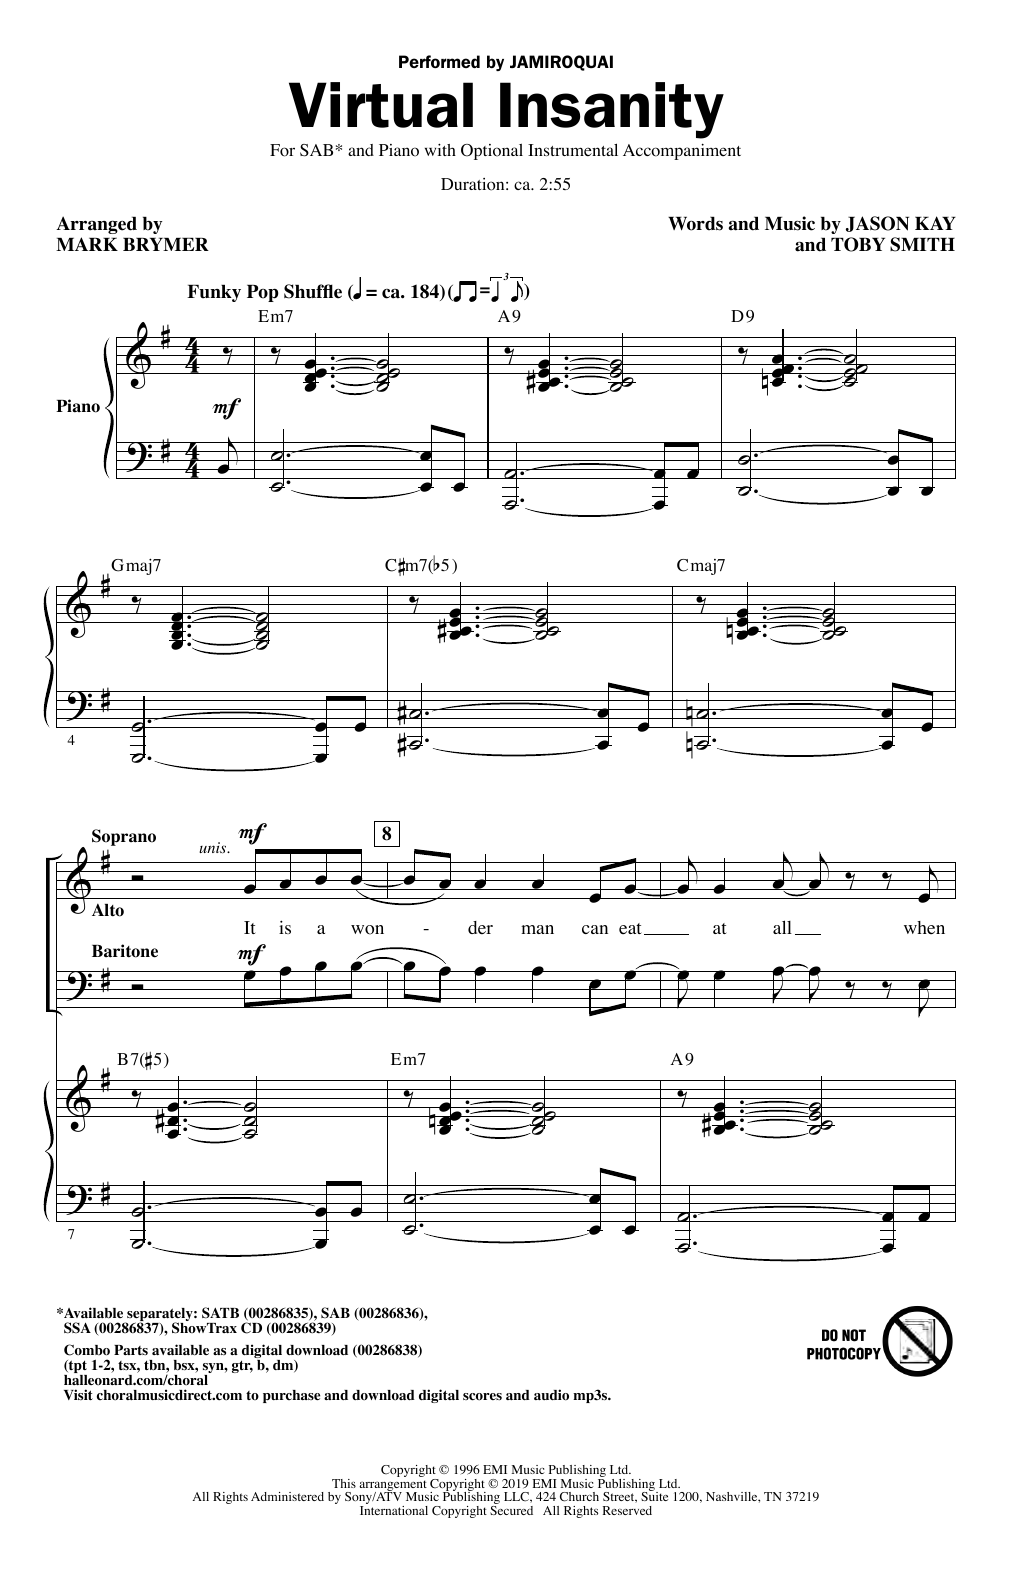 Jamiroquai Virtual Insanity (arr. Mark Brymer) Sheet Music Notes & Chords for SAB Choir - Download or Print PDF